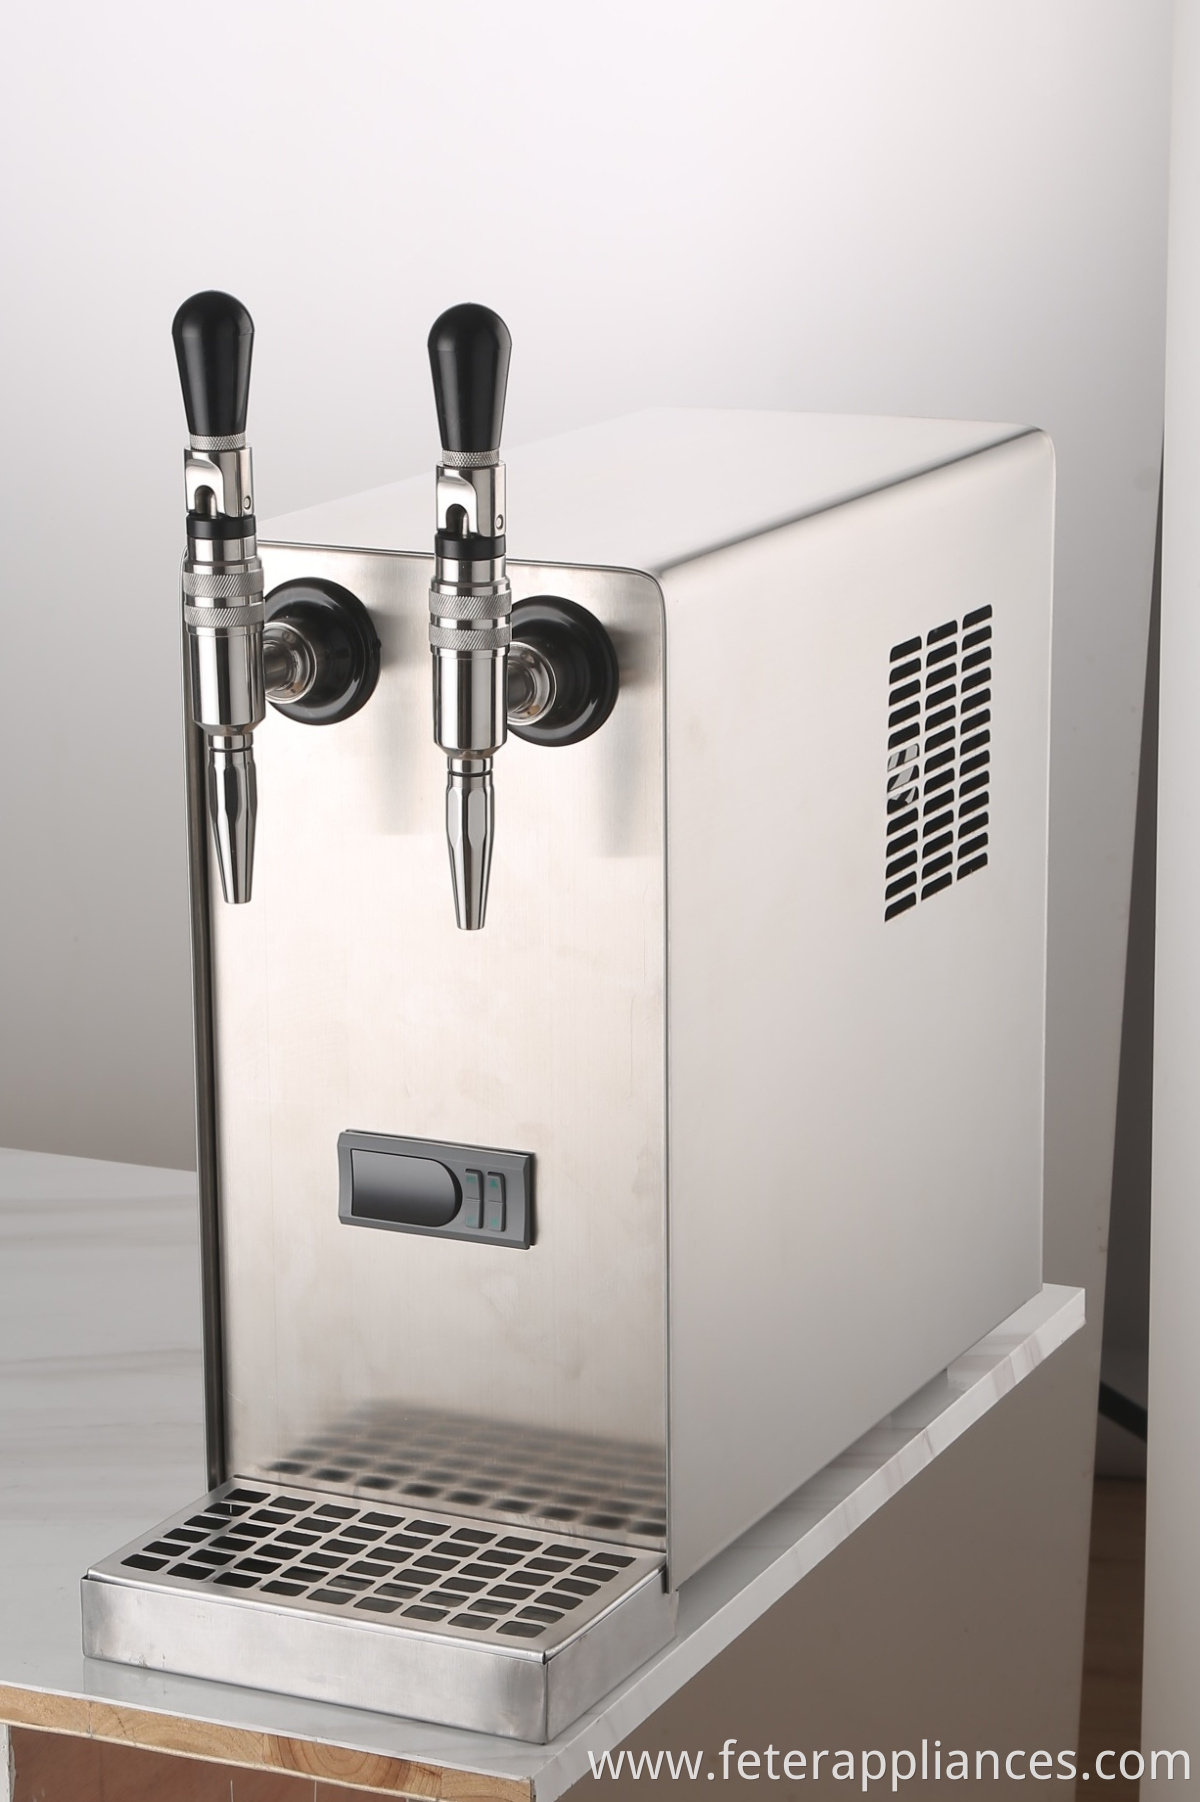 Big capacity kitchen appliances stainless steel beer drink dispenser